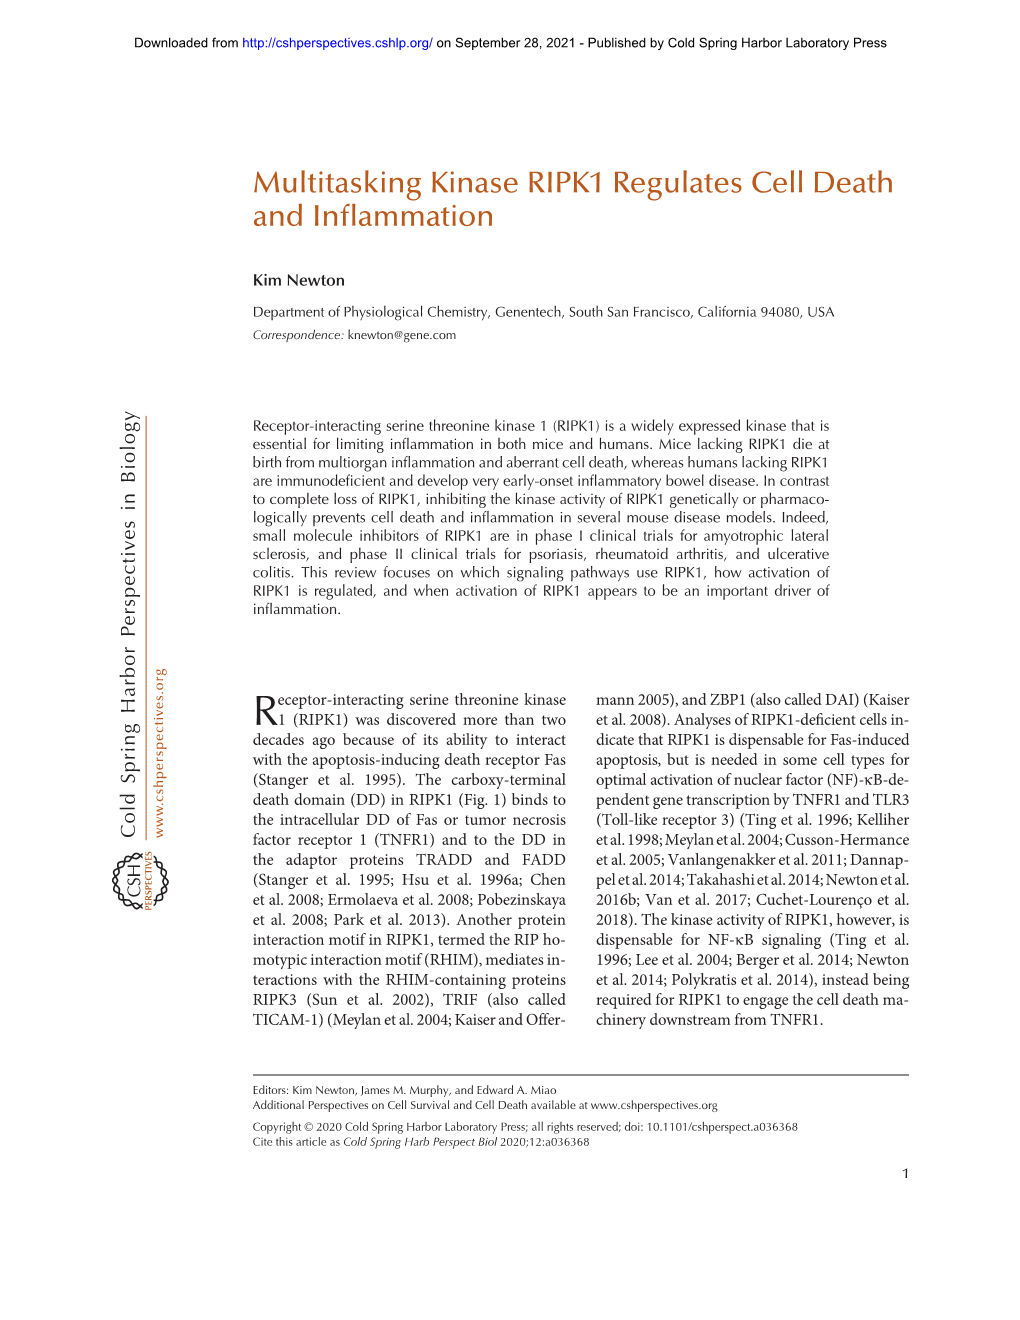 Multitasking Kinase RIPK1 Regulates Cell Death and Inflammation